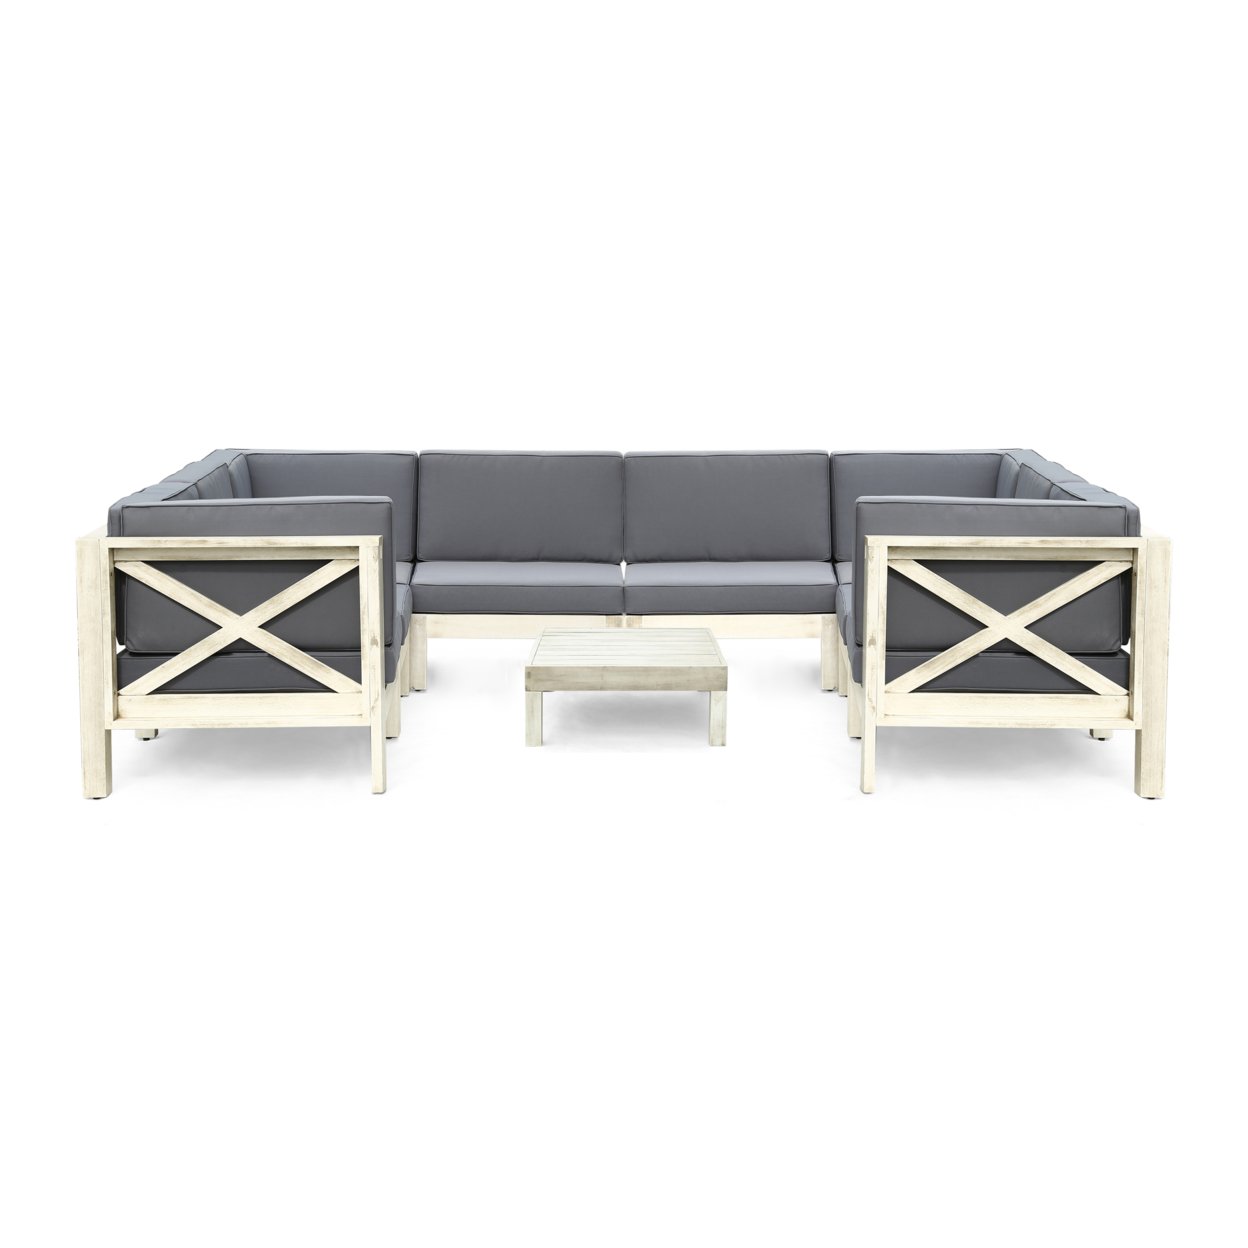 Brava Outdoor Acacia Wood 8 Seater U-Shaped Sectional Sofa Set With Coffee Table - Dark Gray